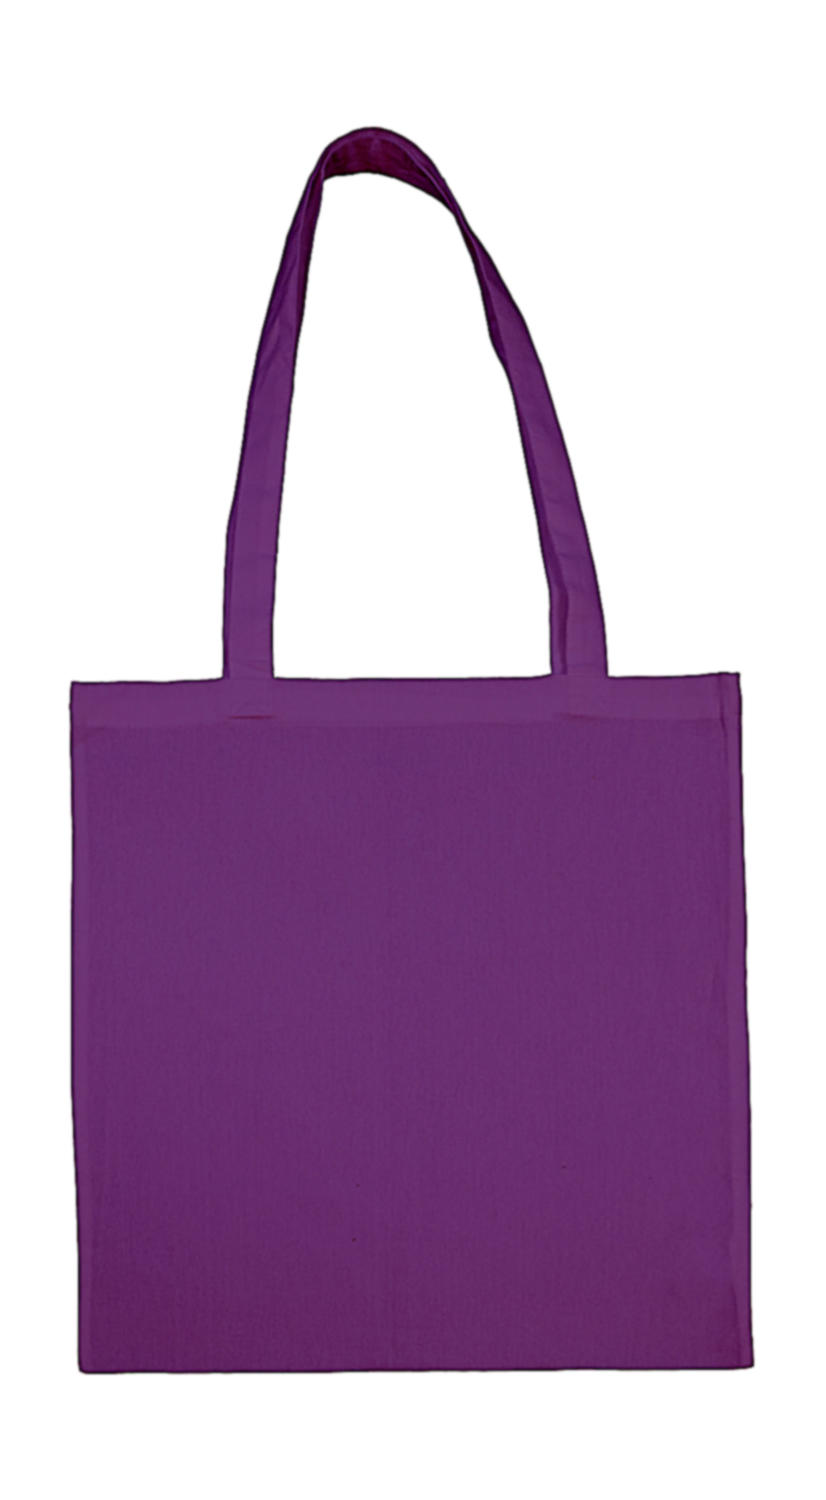  Cotton Bag LH in Farbe Lilac